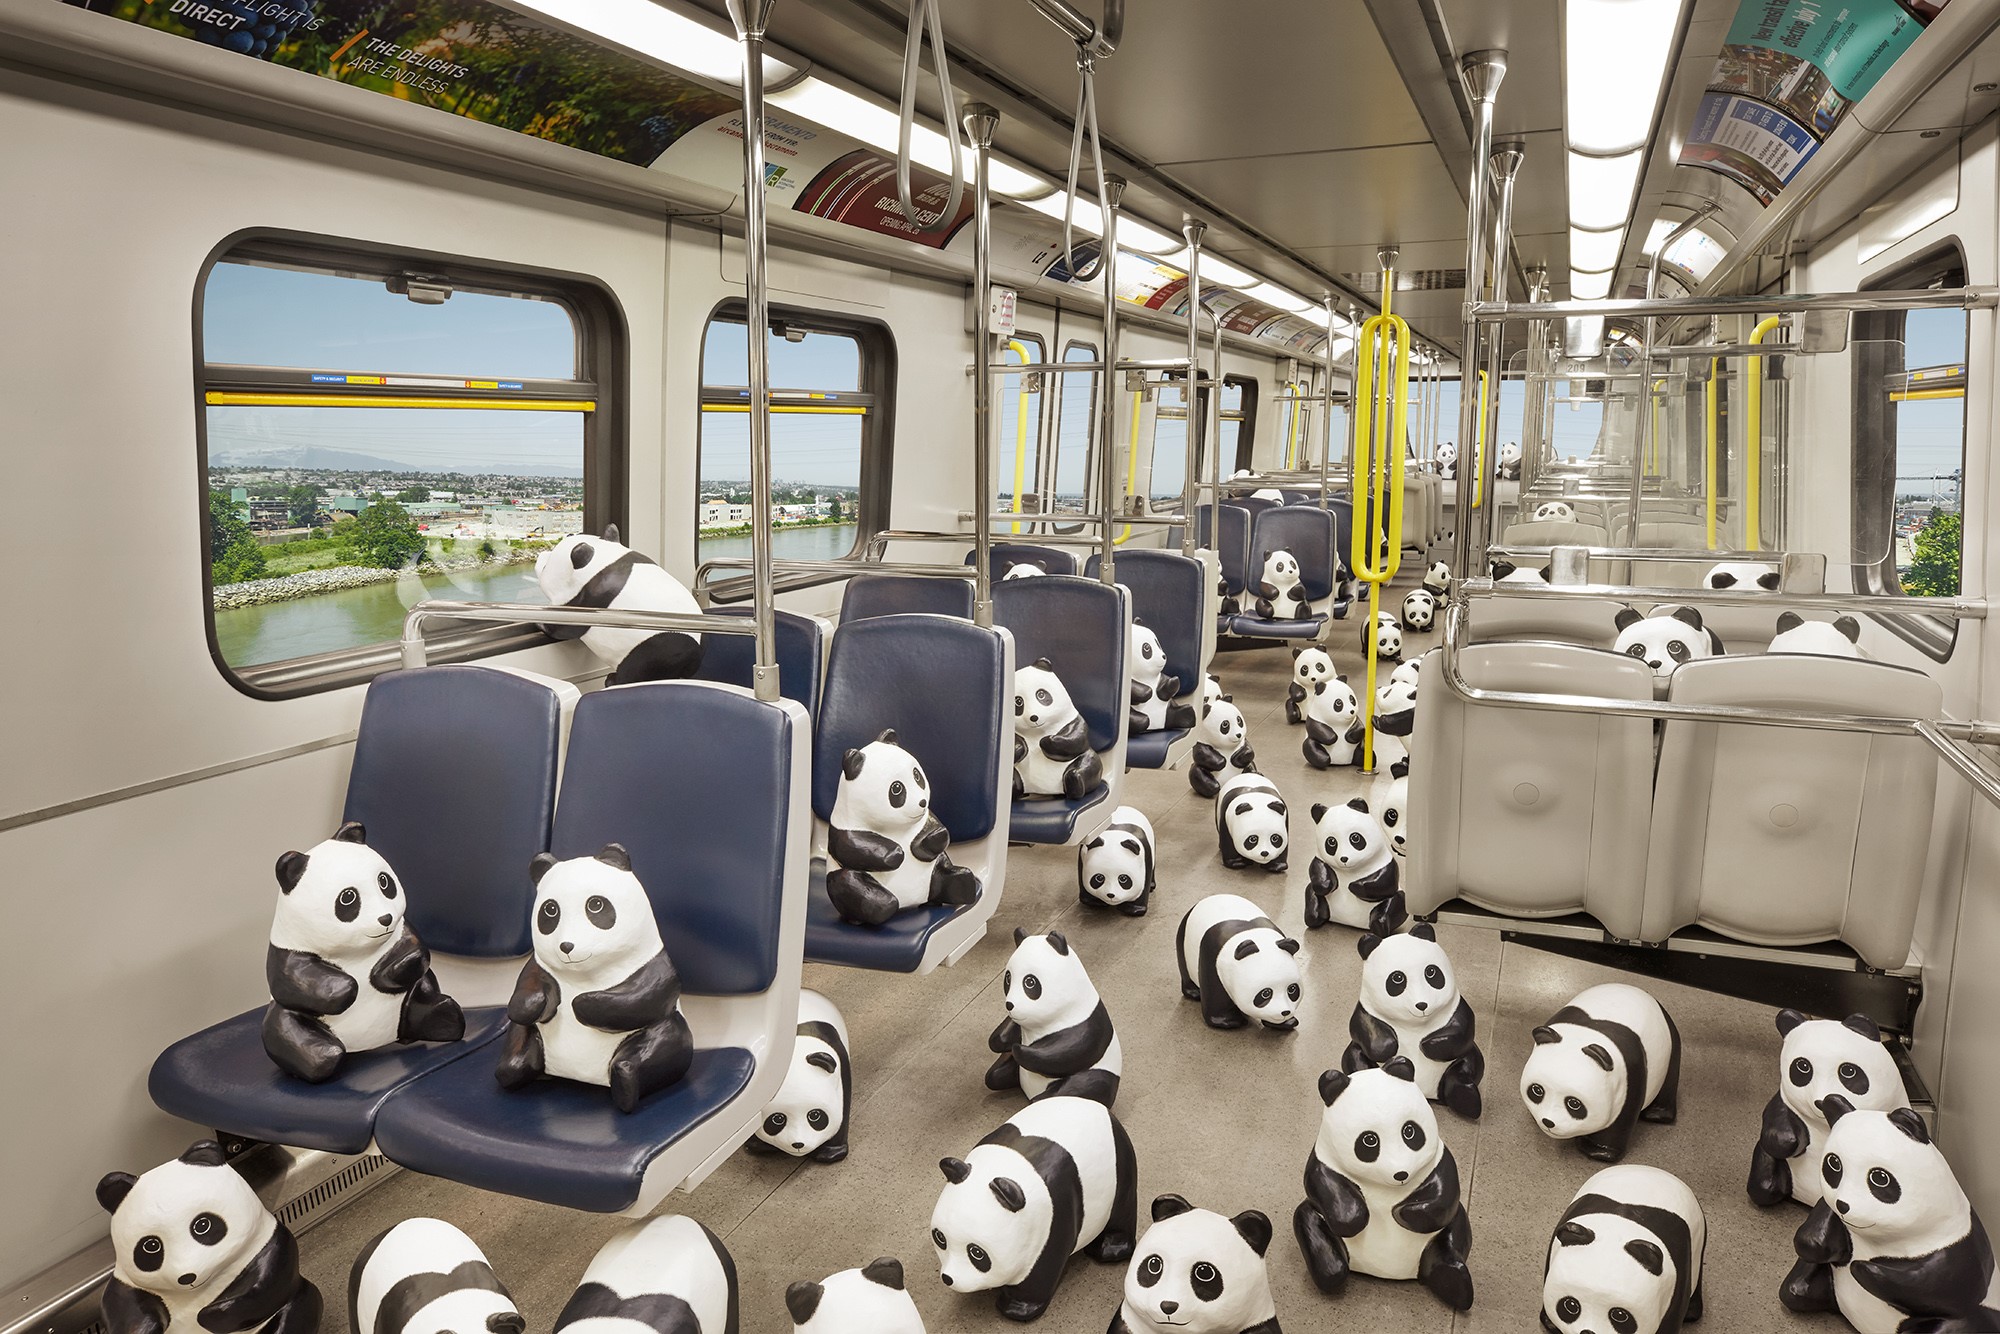 panda tour in canada